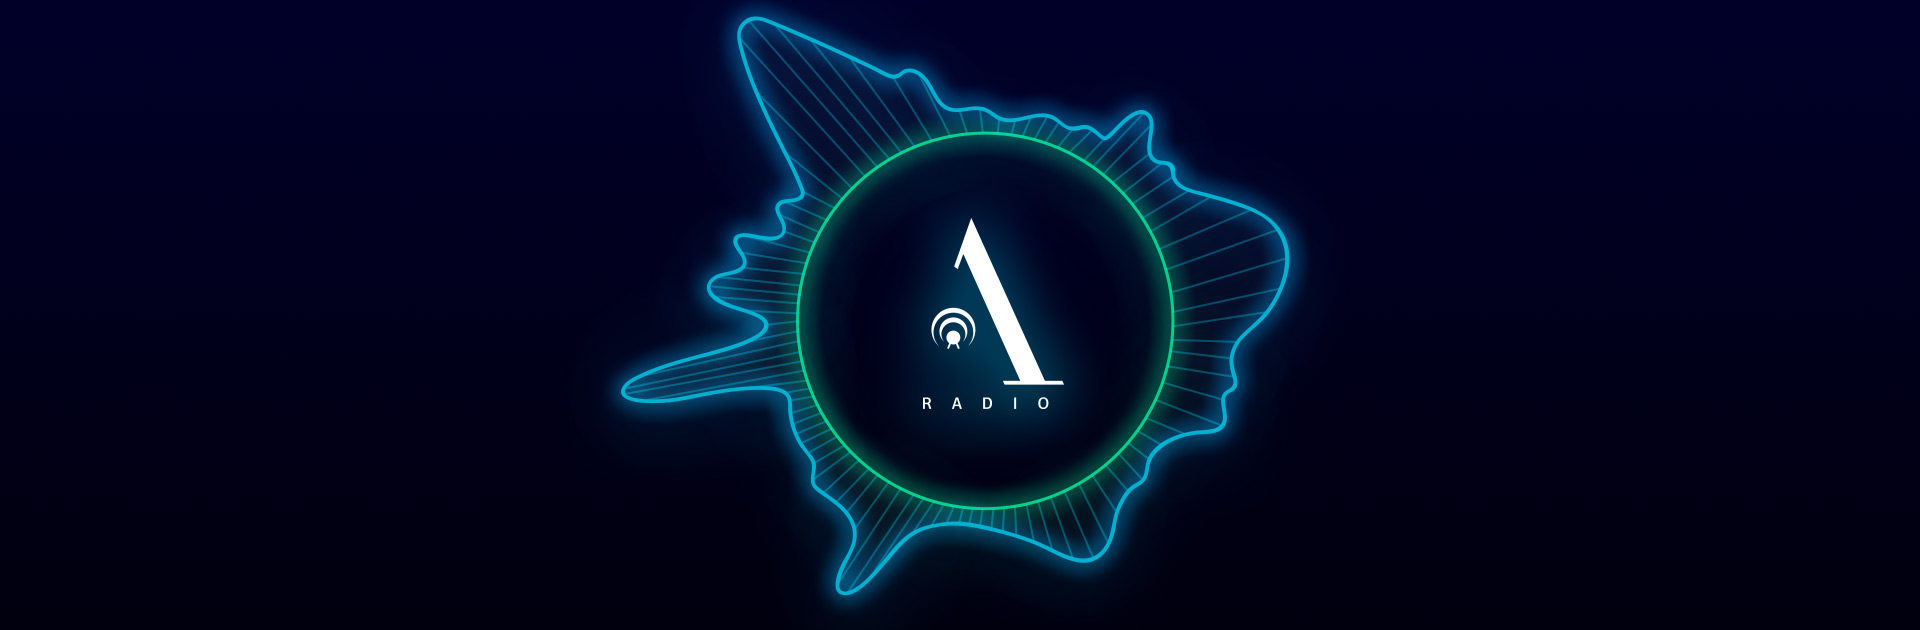 A-RADIO-PORTAL.jpg